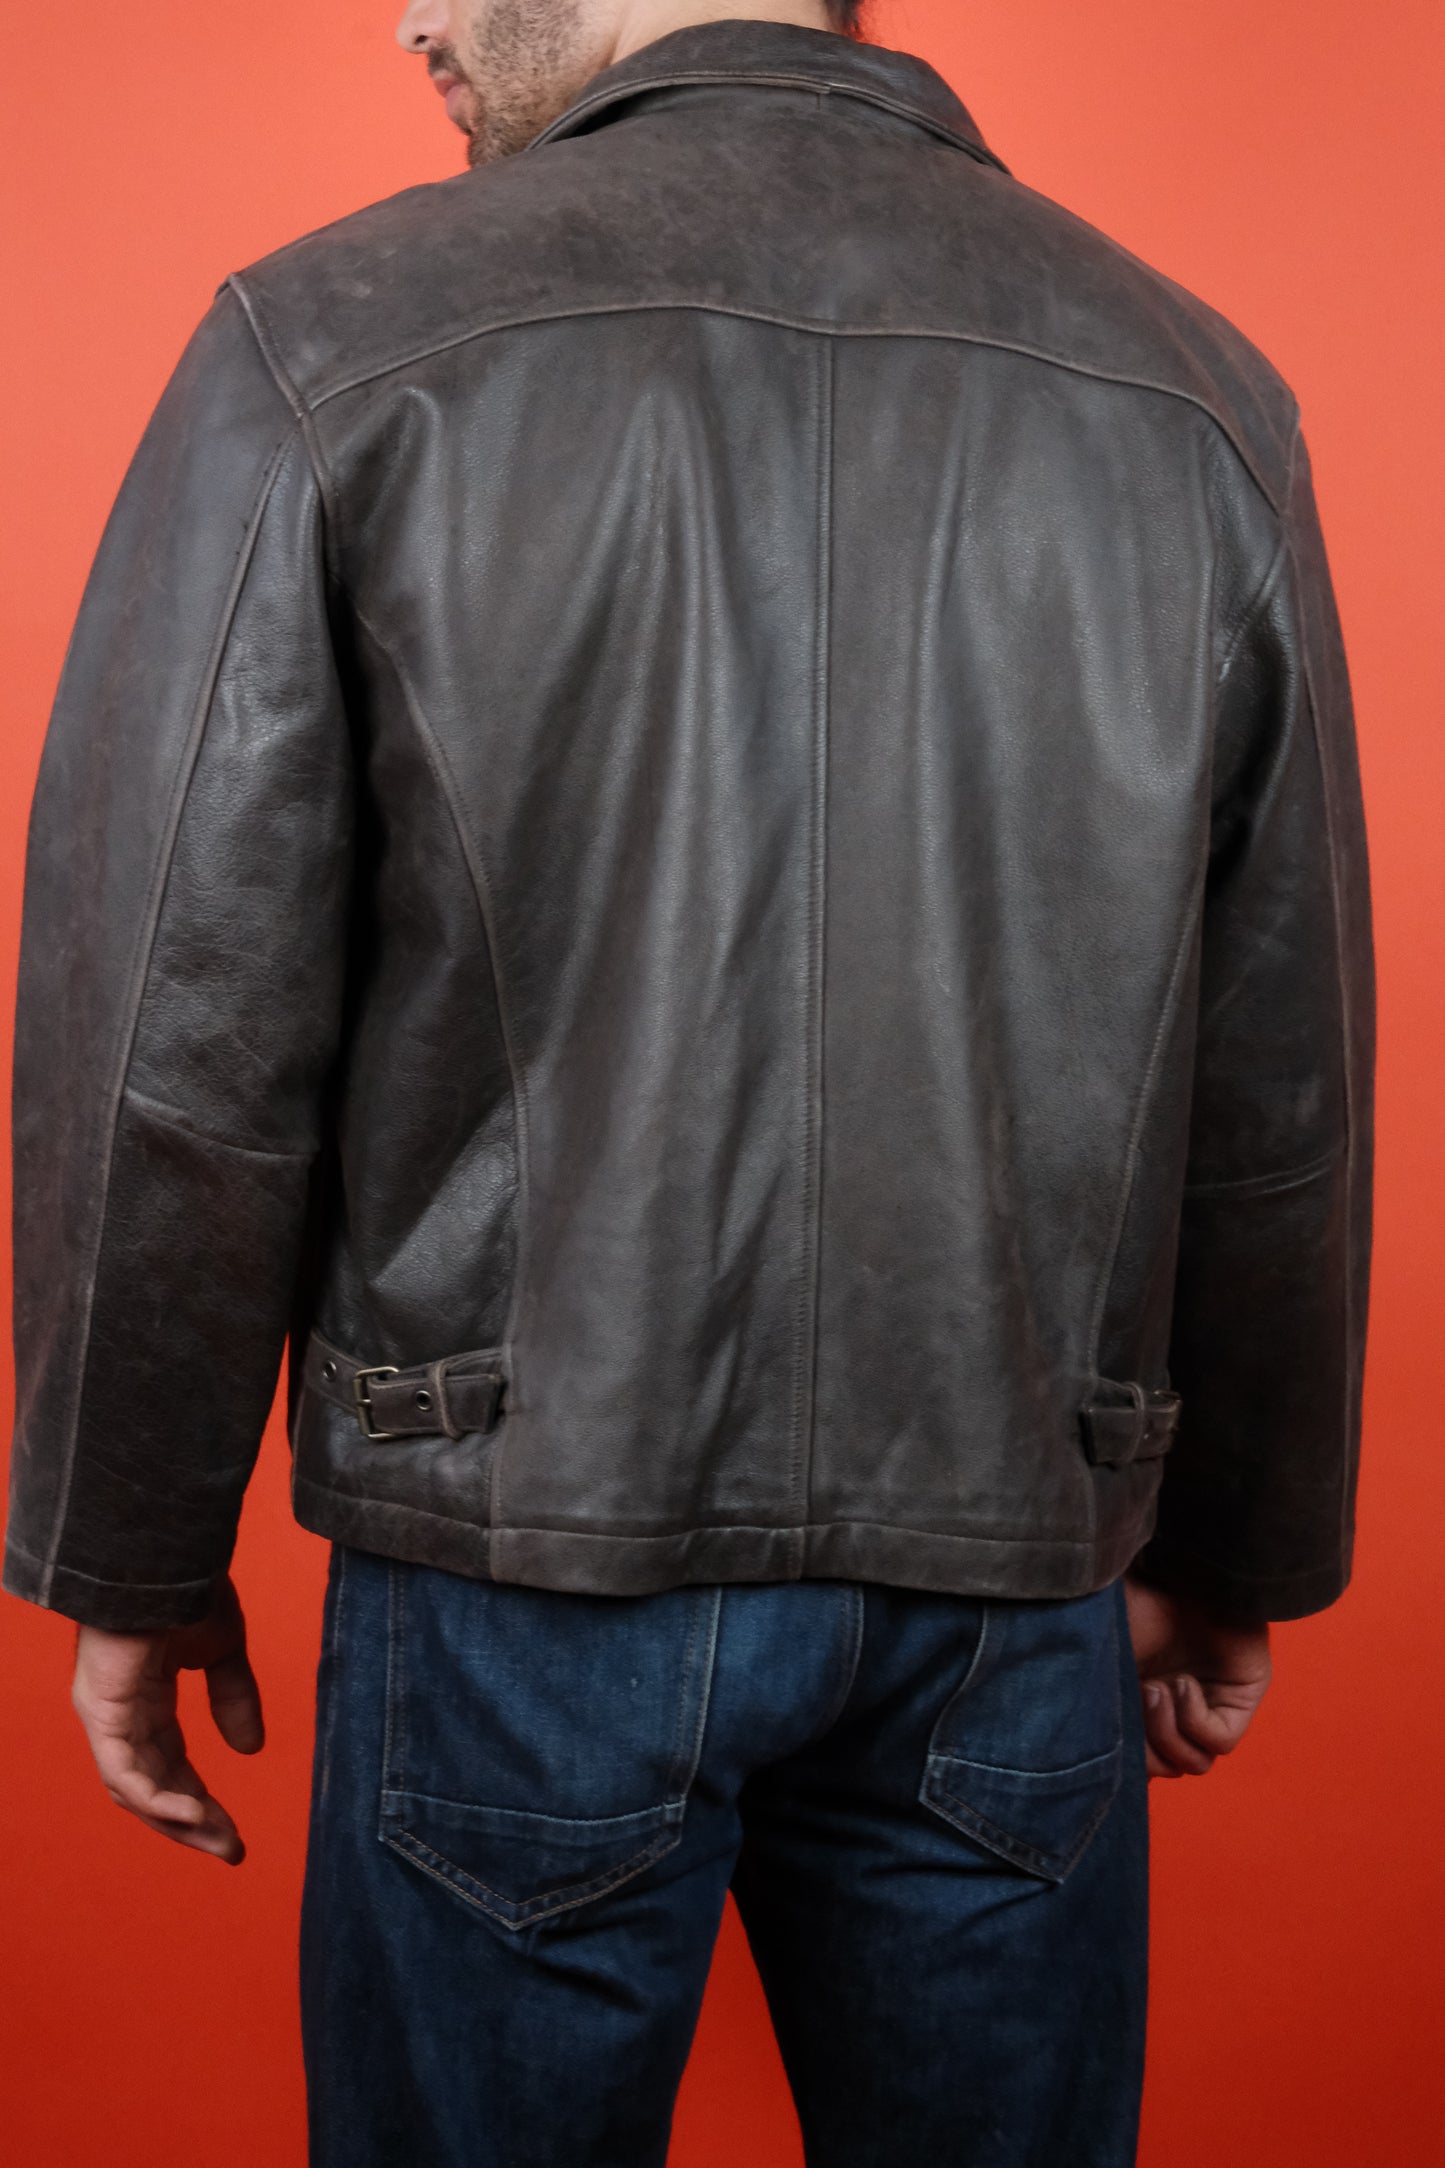 Rifle & Co. Brown Leather Jacket w/ warm lining 'L' - vintage clothing clochard92.com